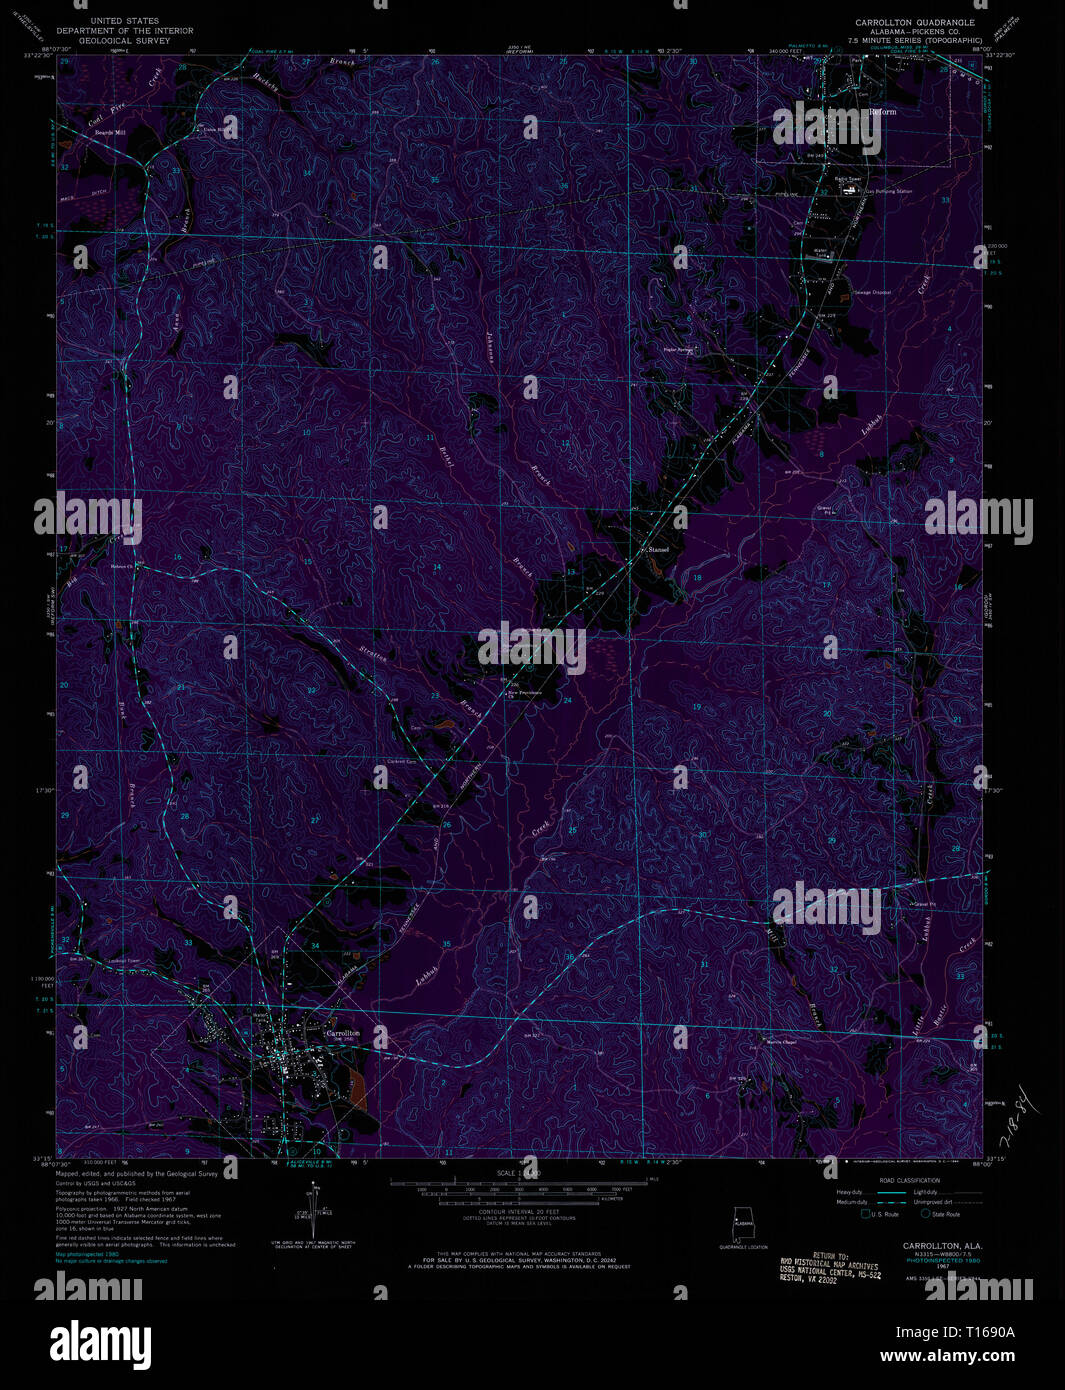 USGS TOPO Map Alabama AL Carrollton 303421 1967 24000 Inverted Stock Photo